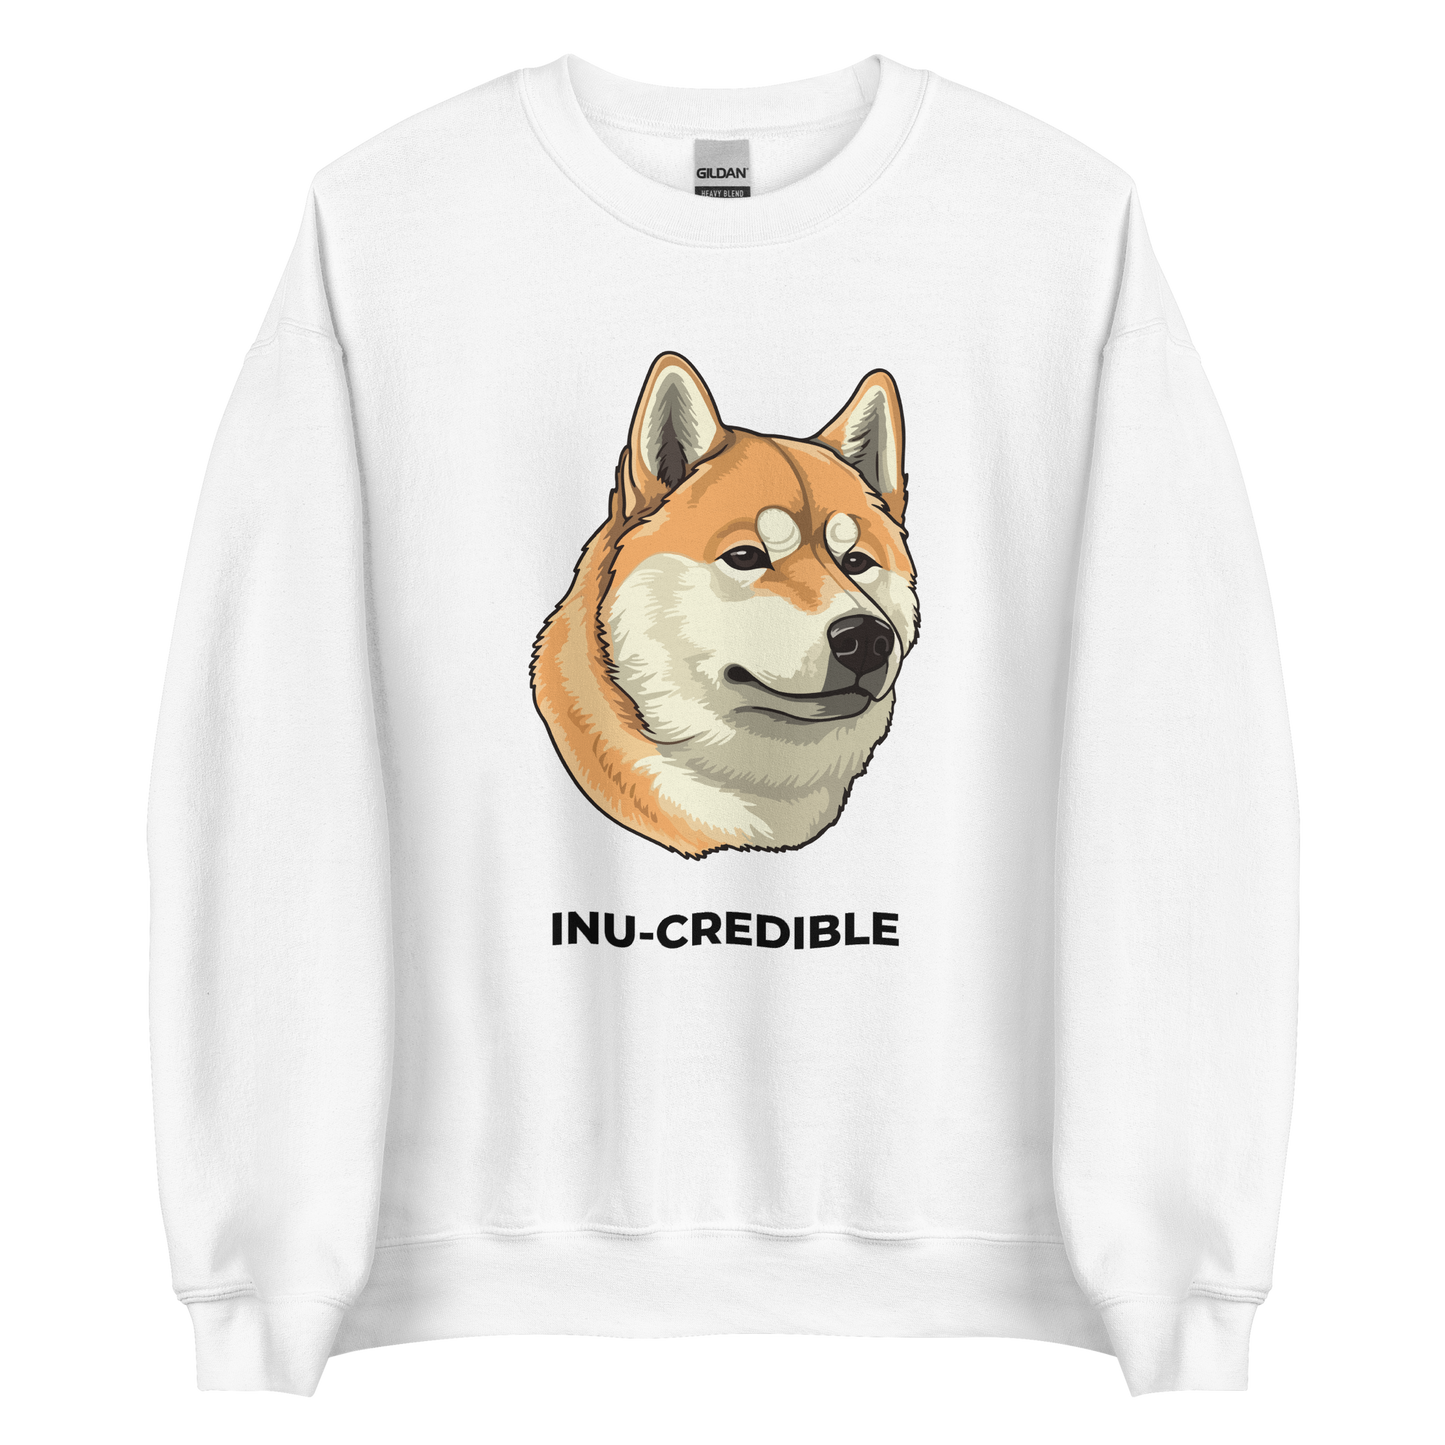 White Shiba Inu Sweatshirt featuring the Inu-Credible graphic on the chest - Funny Graphic Shiba Inu Sweatshirts - Boozy Fox